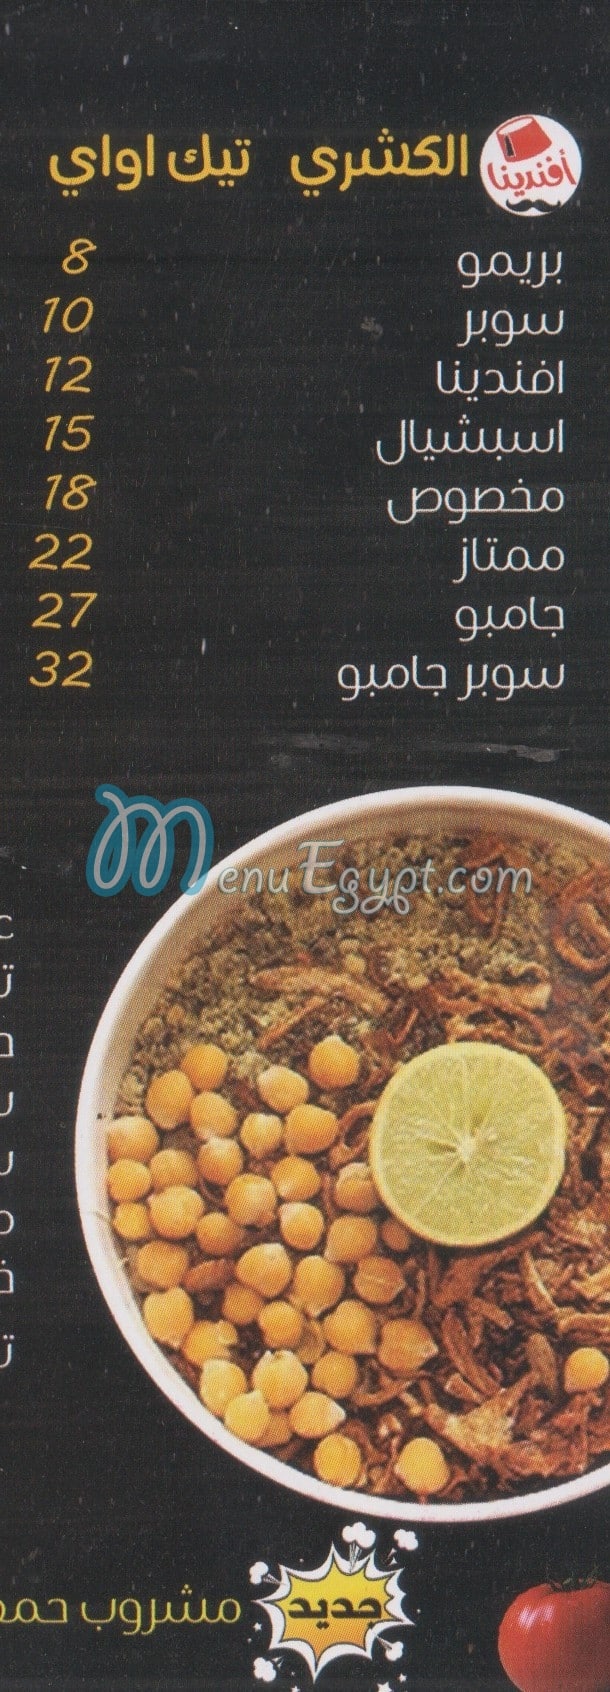 afandena menu Egypt